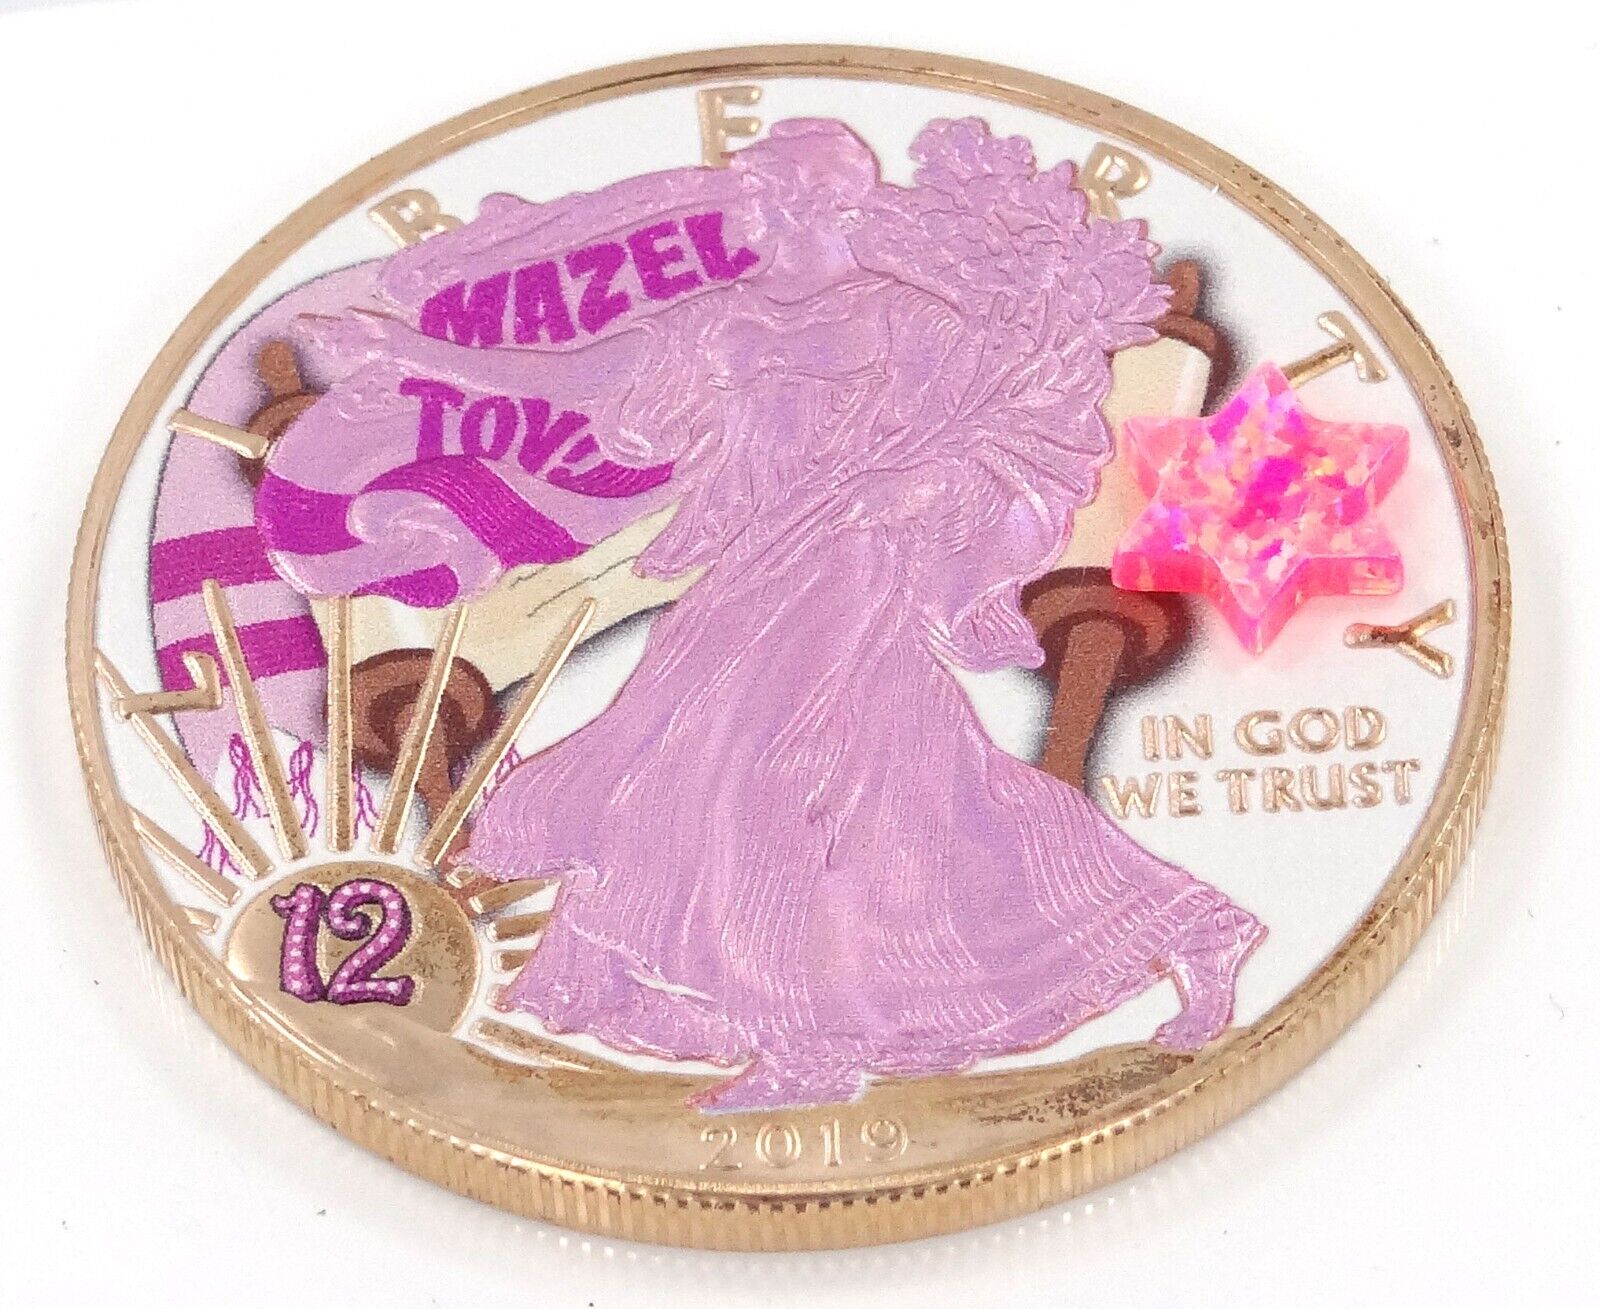 1 Oz Silver Coin 2019 American Eagle $1 Jewish Mazel Tov Bat Mitzvah Opal Stone-classypw.com-1